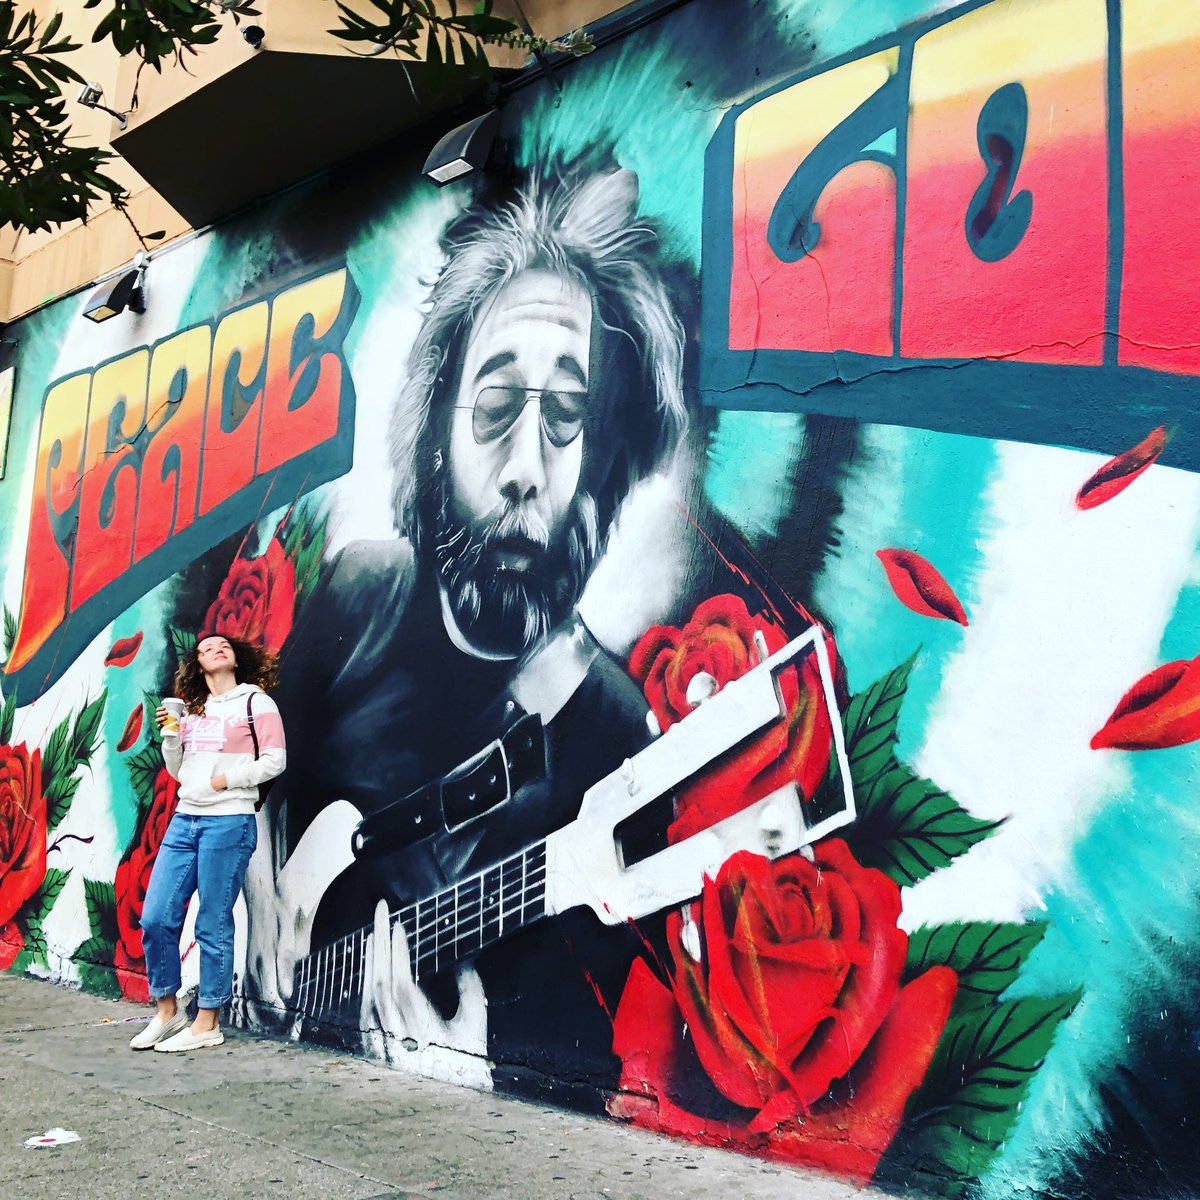 Walked past the Jerry Garcia mural in the Haight last weekend. #jerrygarcia #gratefuldead #haightashbury #haightstreet #haightashbury #sanfrancisco #sanfran